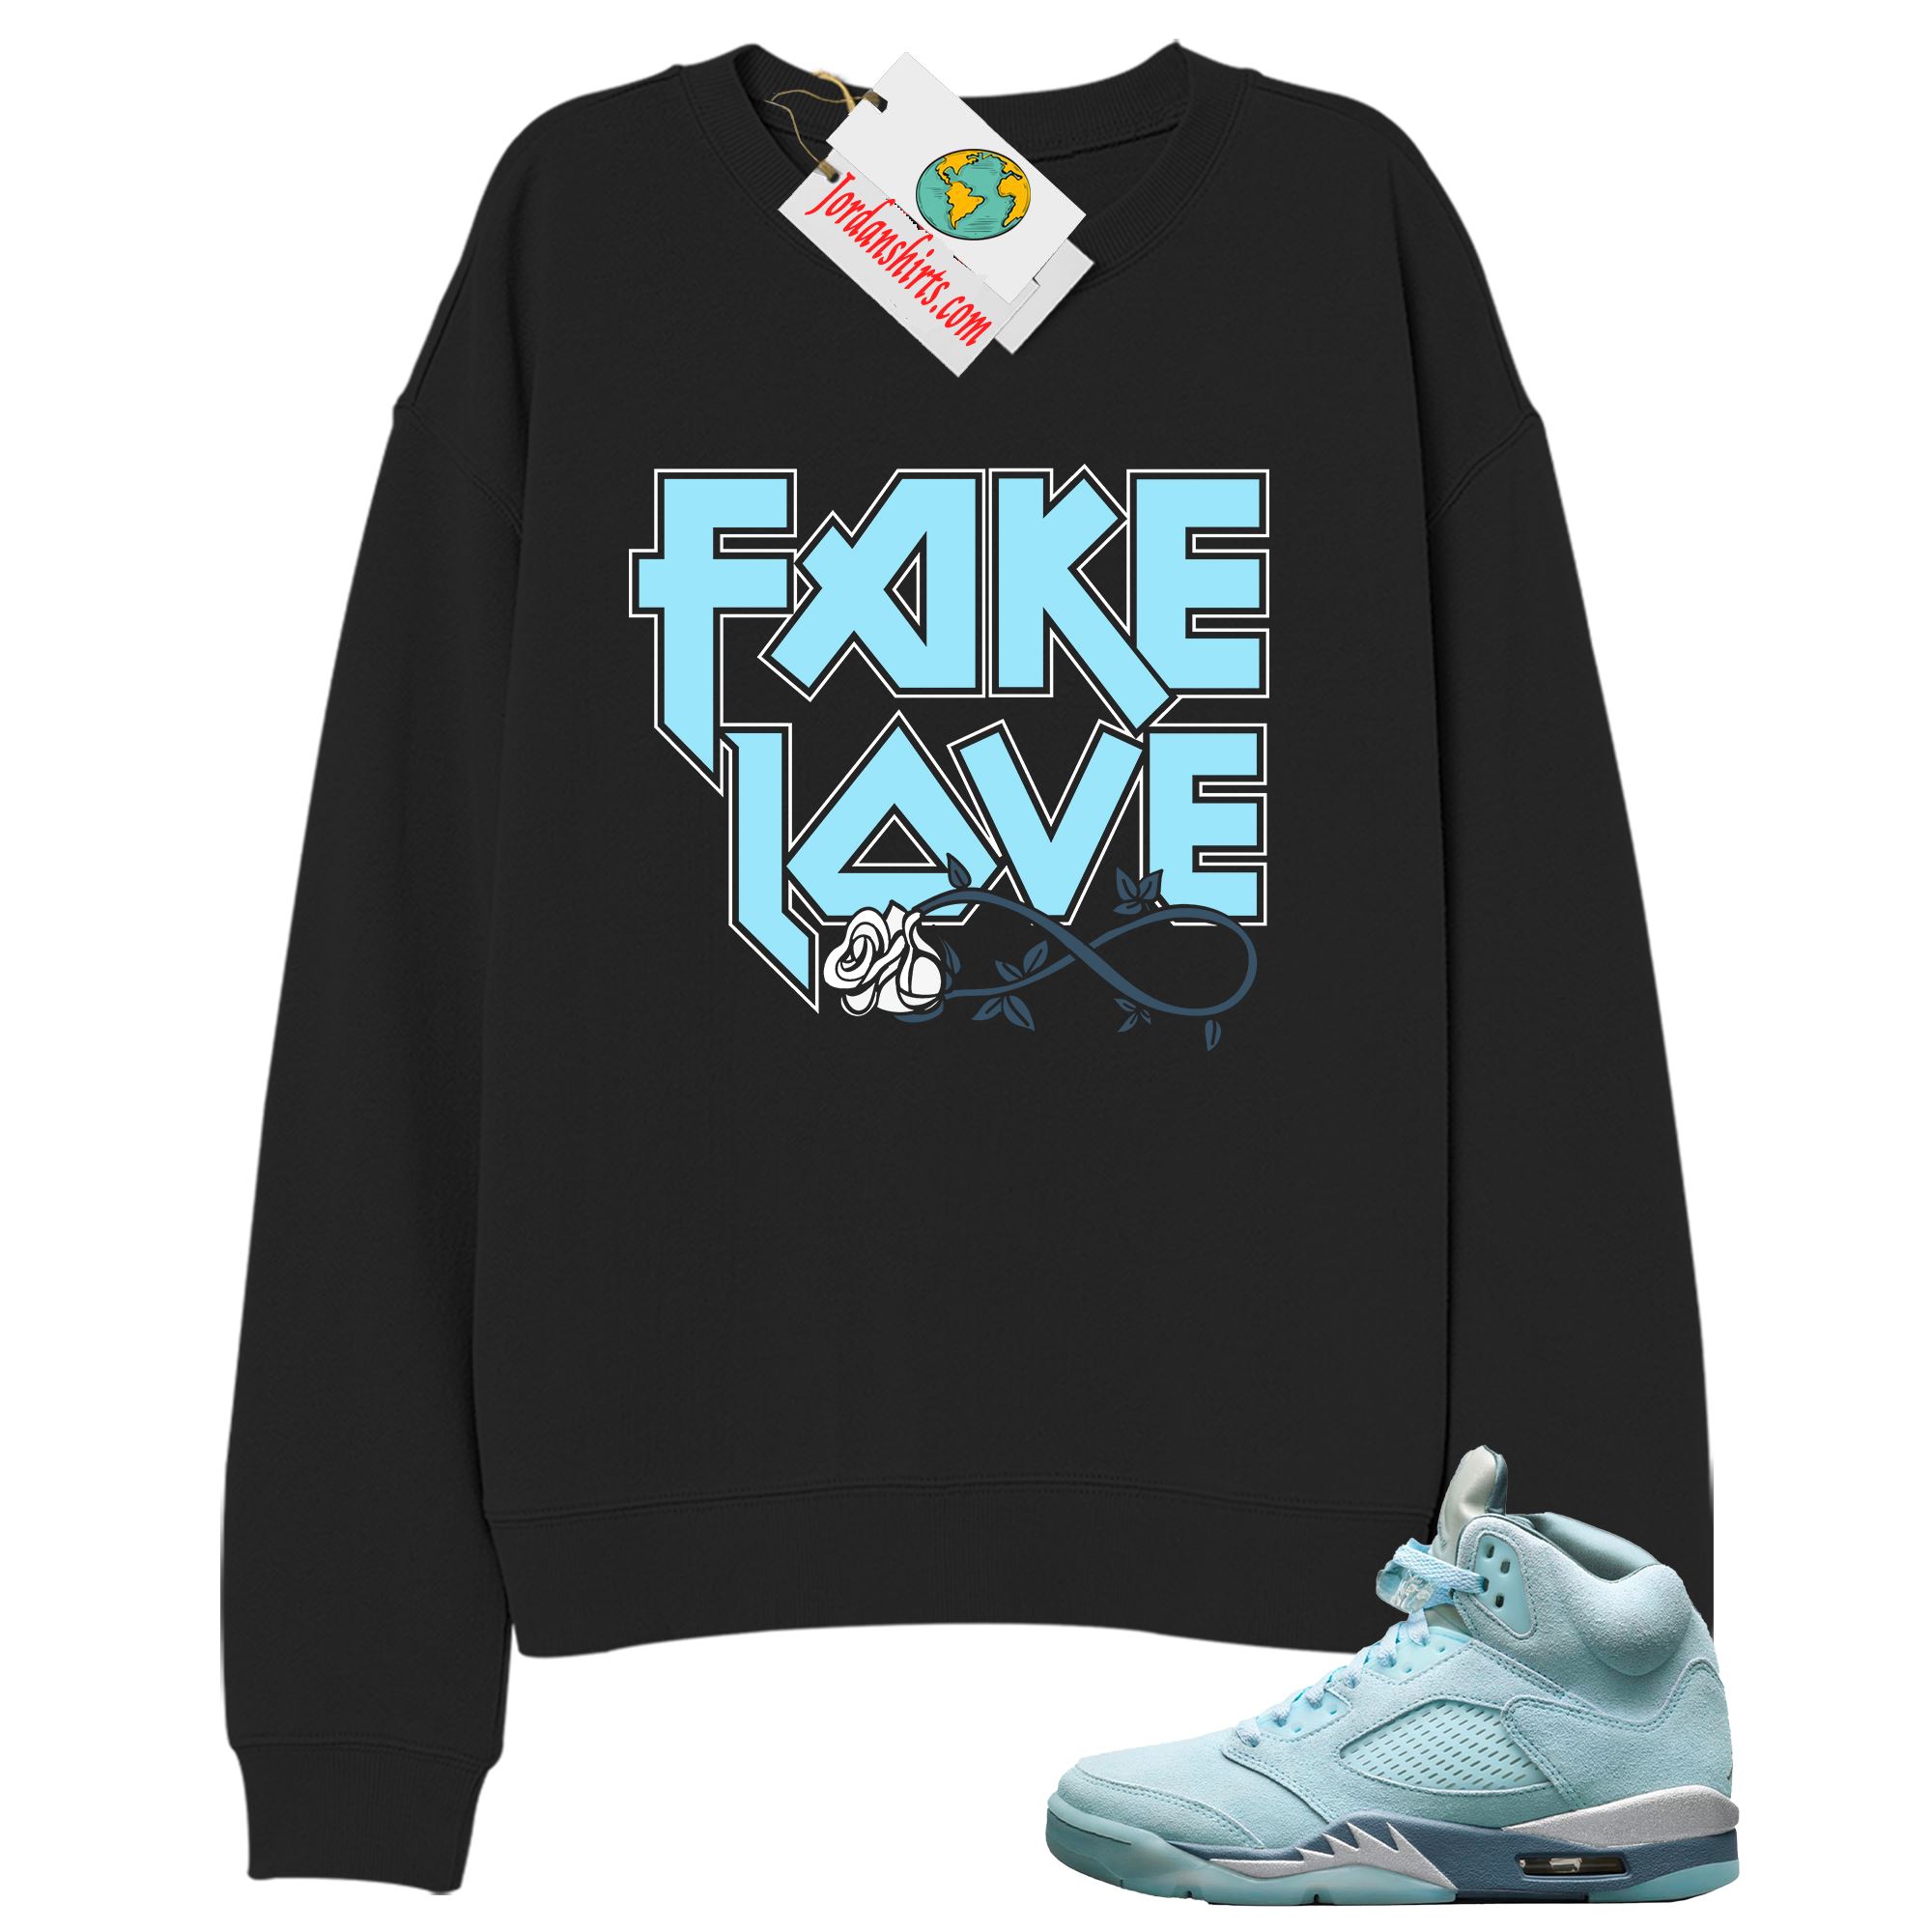 Jordan 5 Sweatshirt, Fake Love Infinity Rose Black Sweatshirt Air Jordan 5 Bluebird 5s Size Up To 5xl